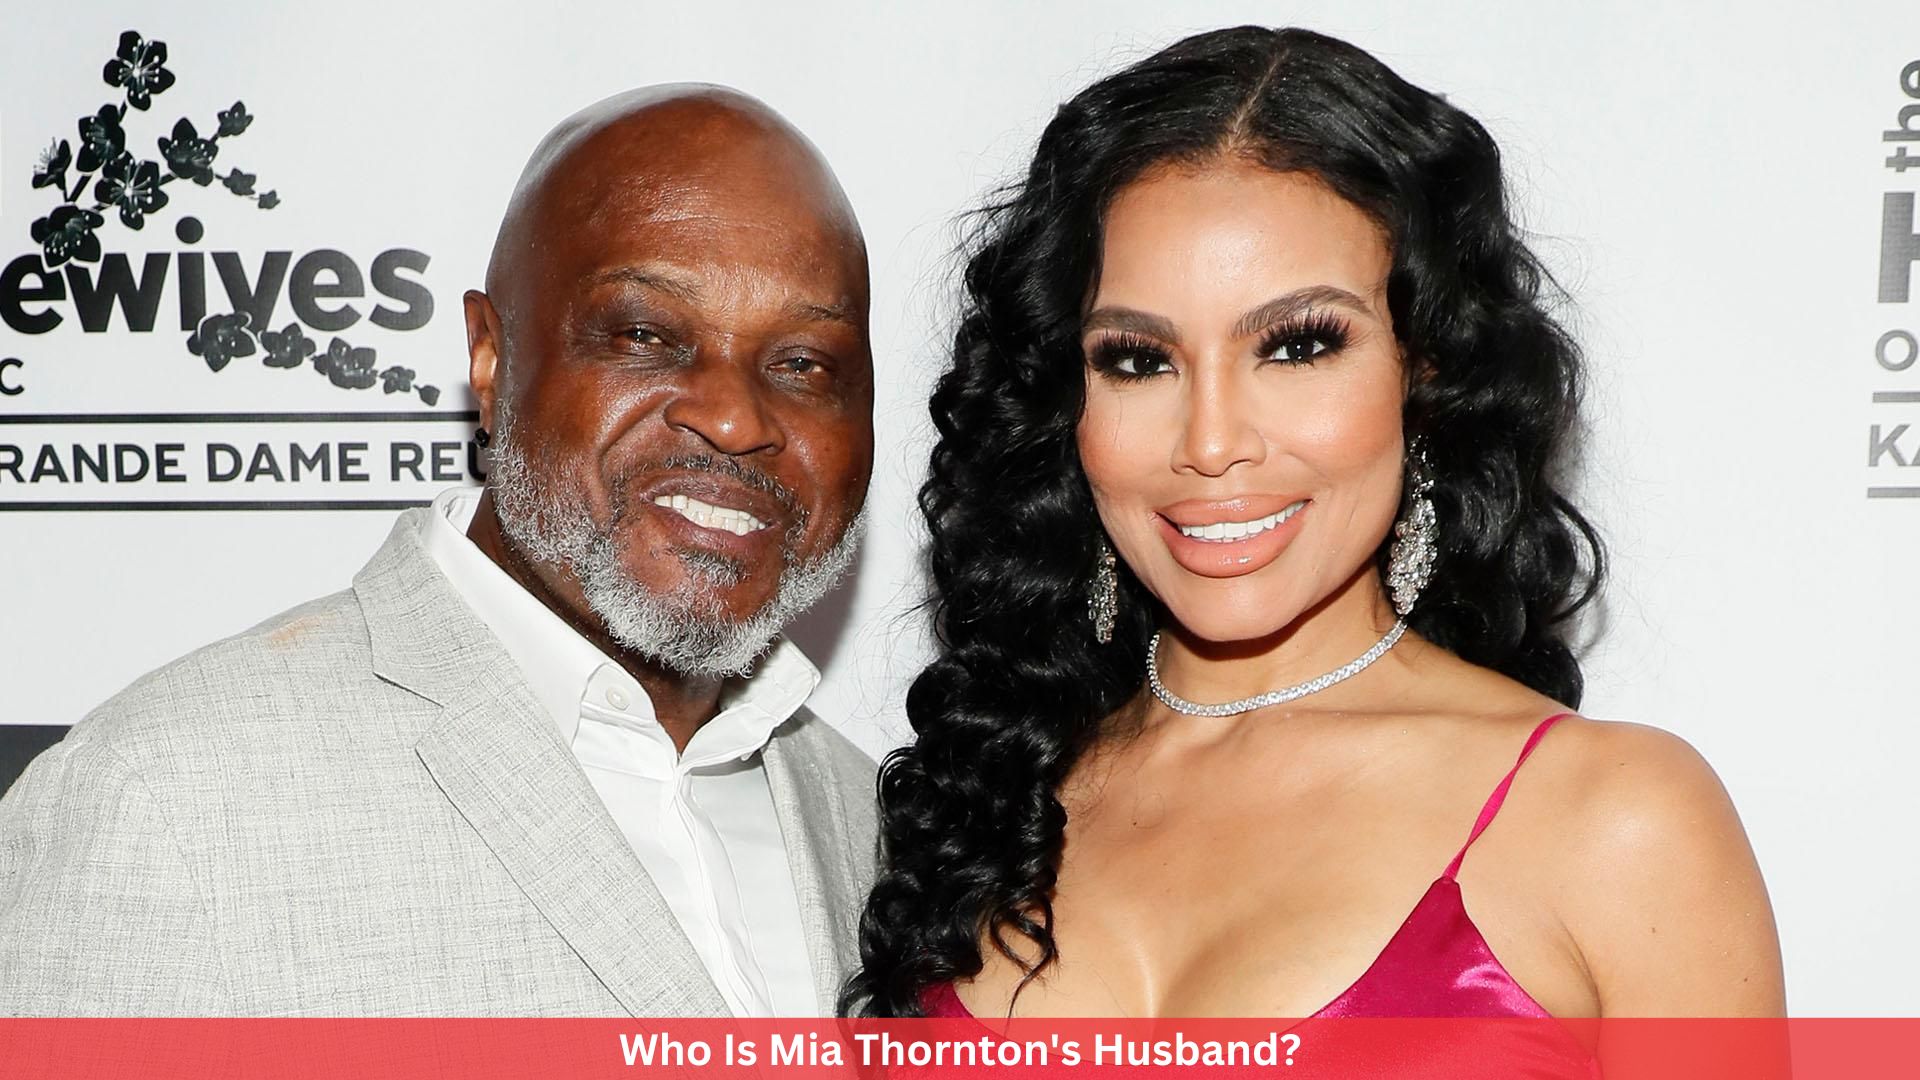 Who Is Mia Thornton's Husband?